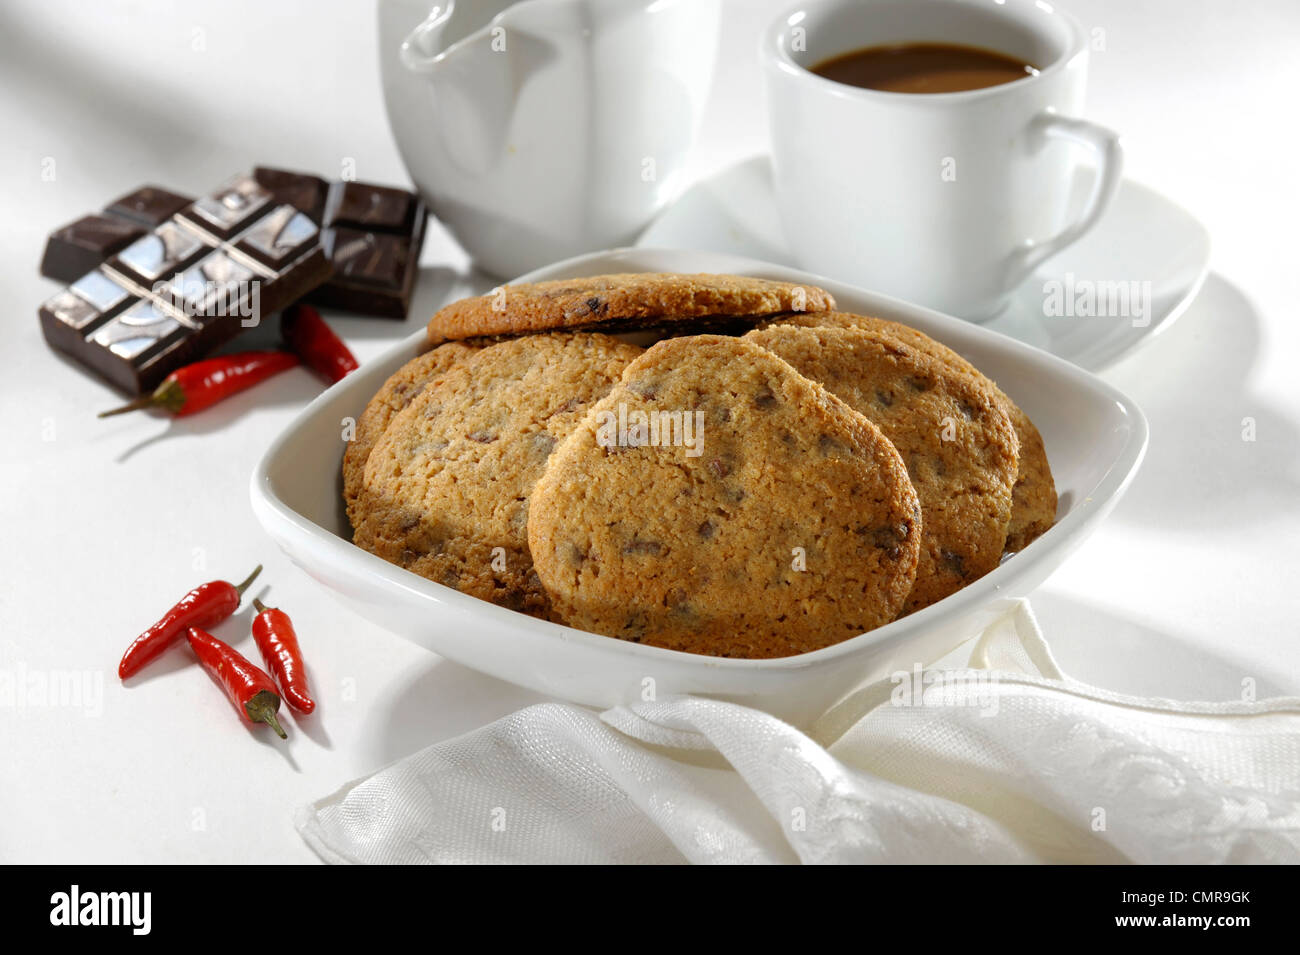 chocolate chili cookie Stock Photo